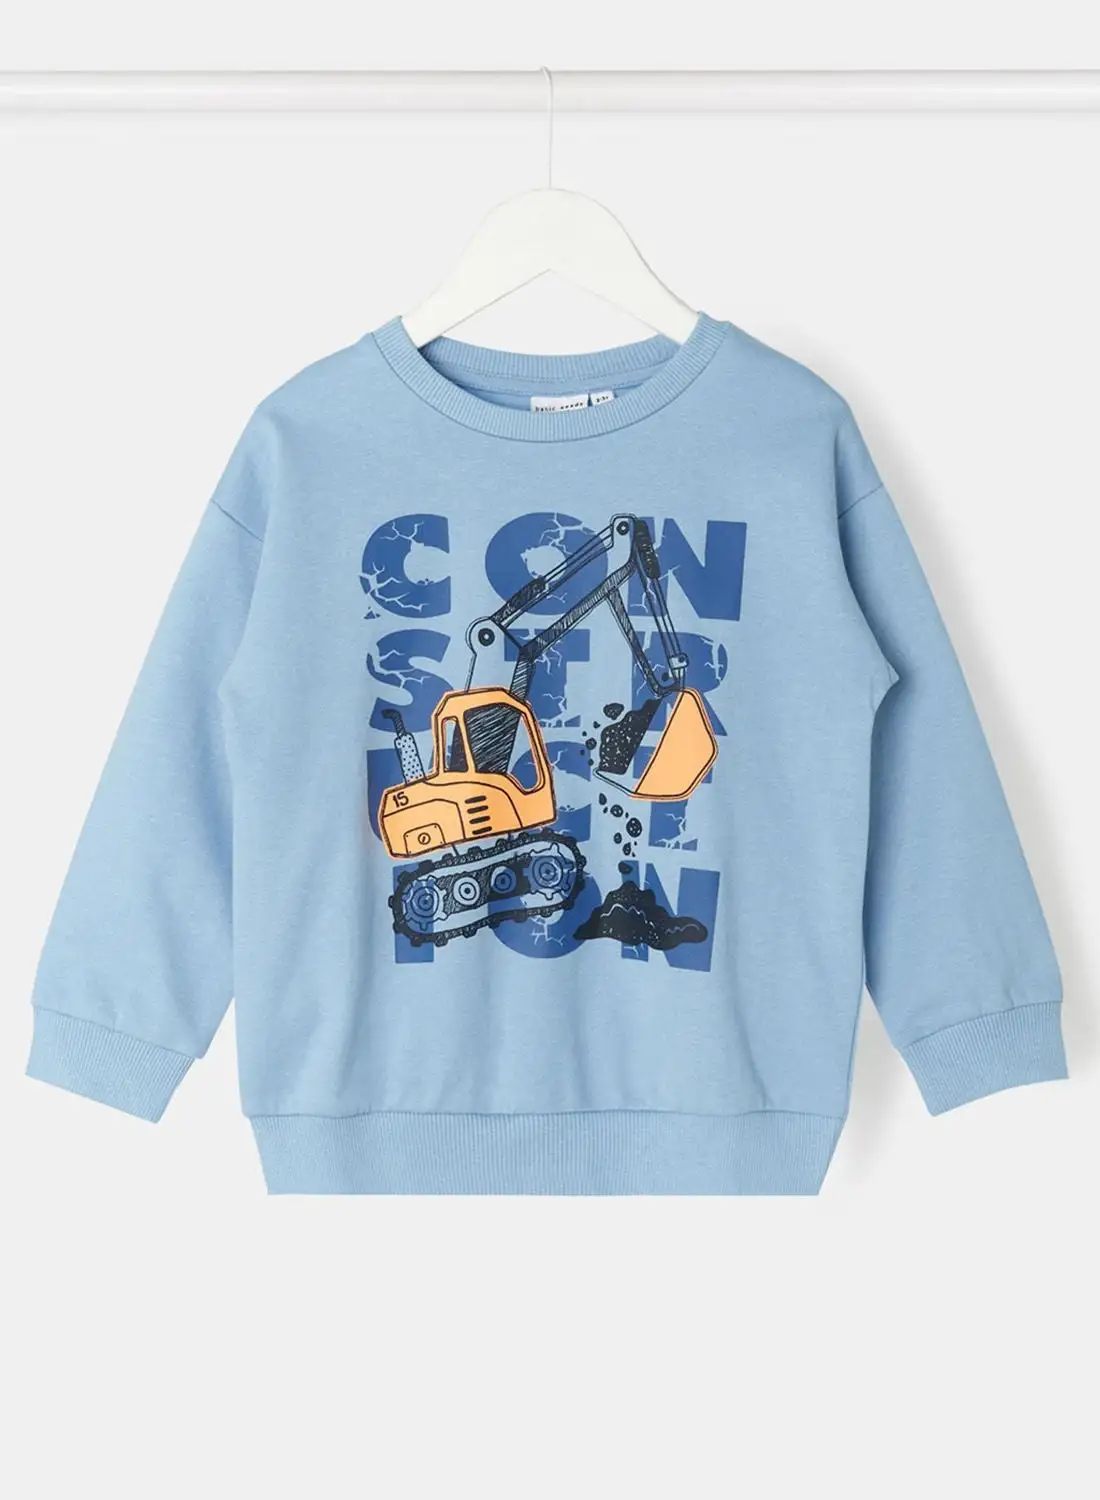 NAME IT Kids Graphic Print Sweatshirt